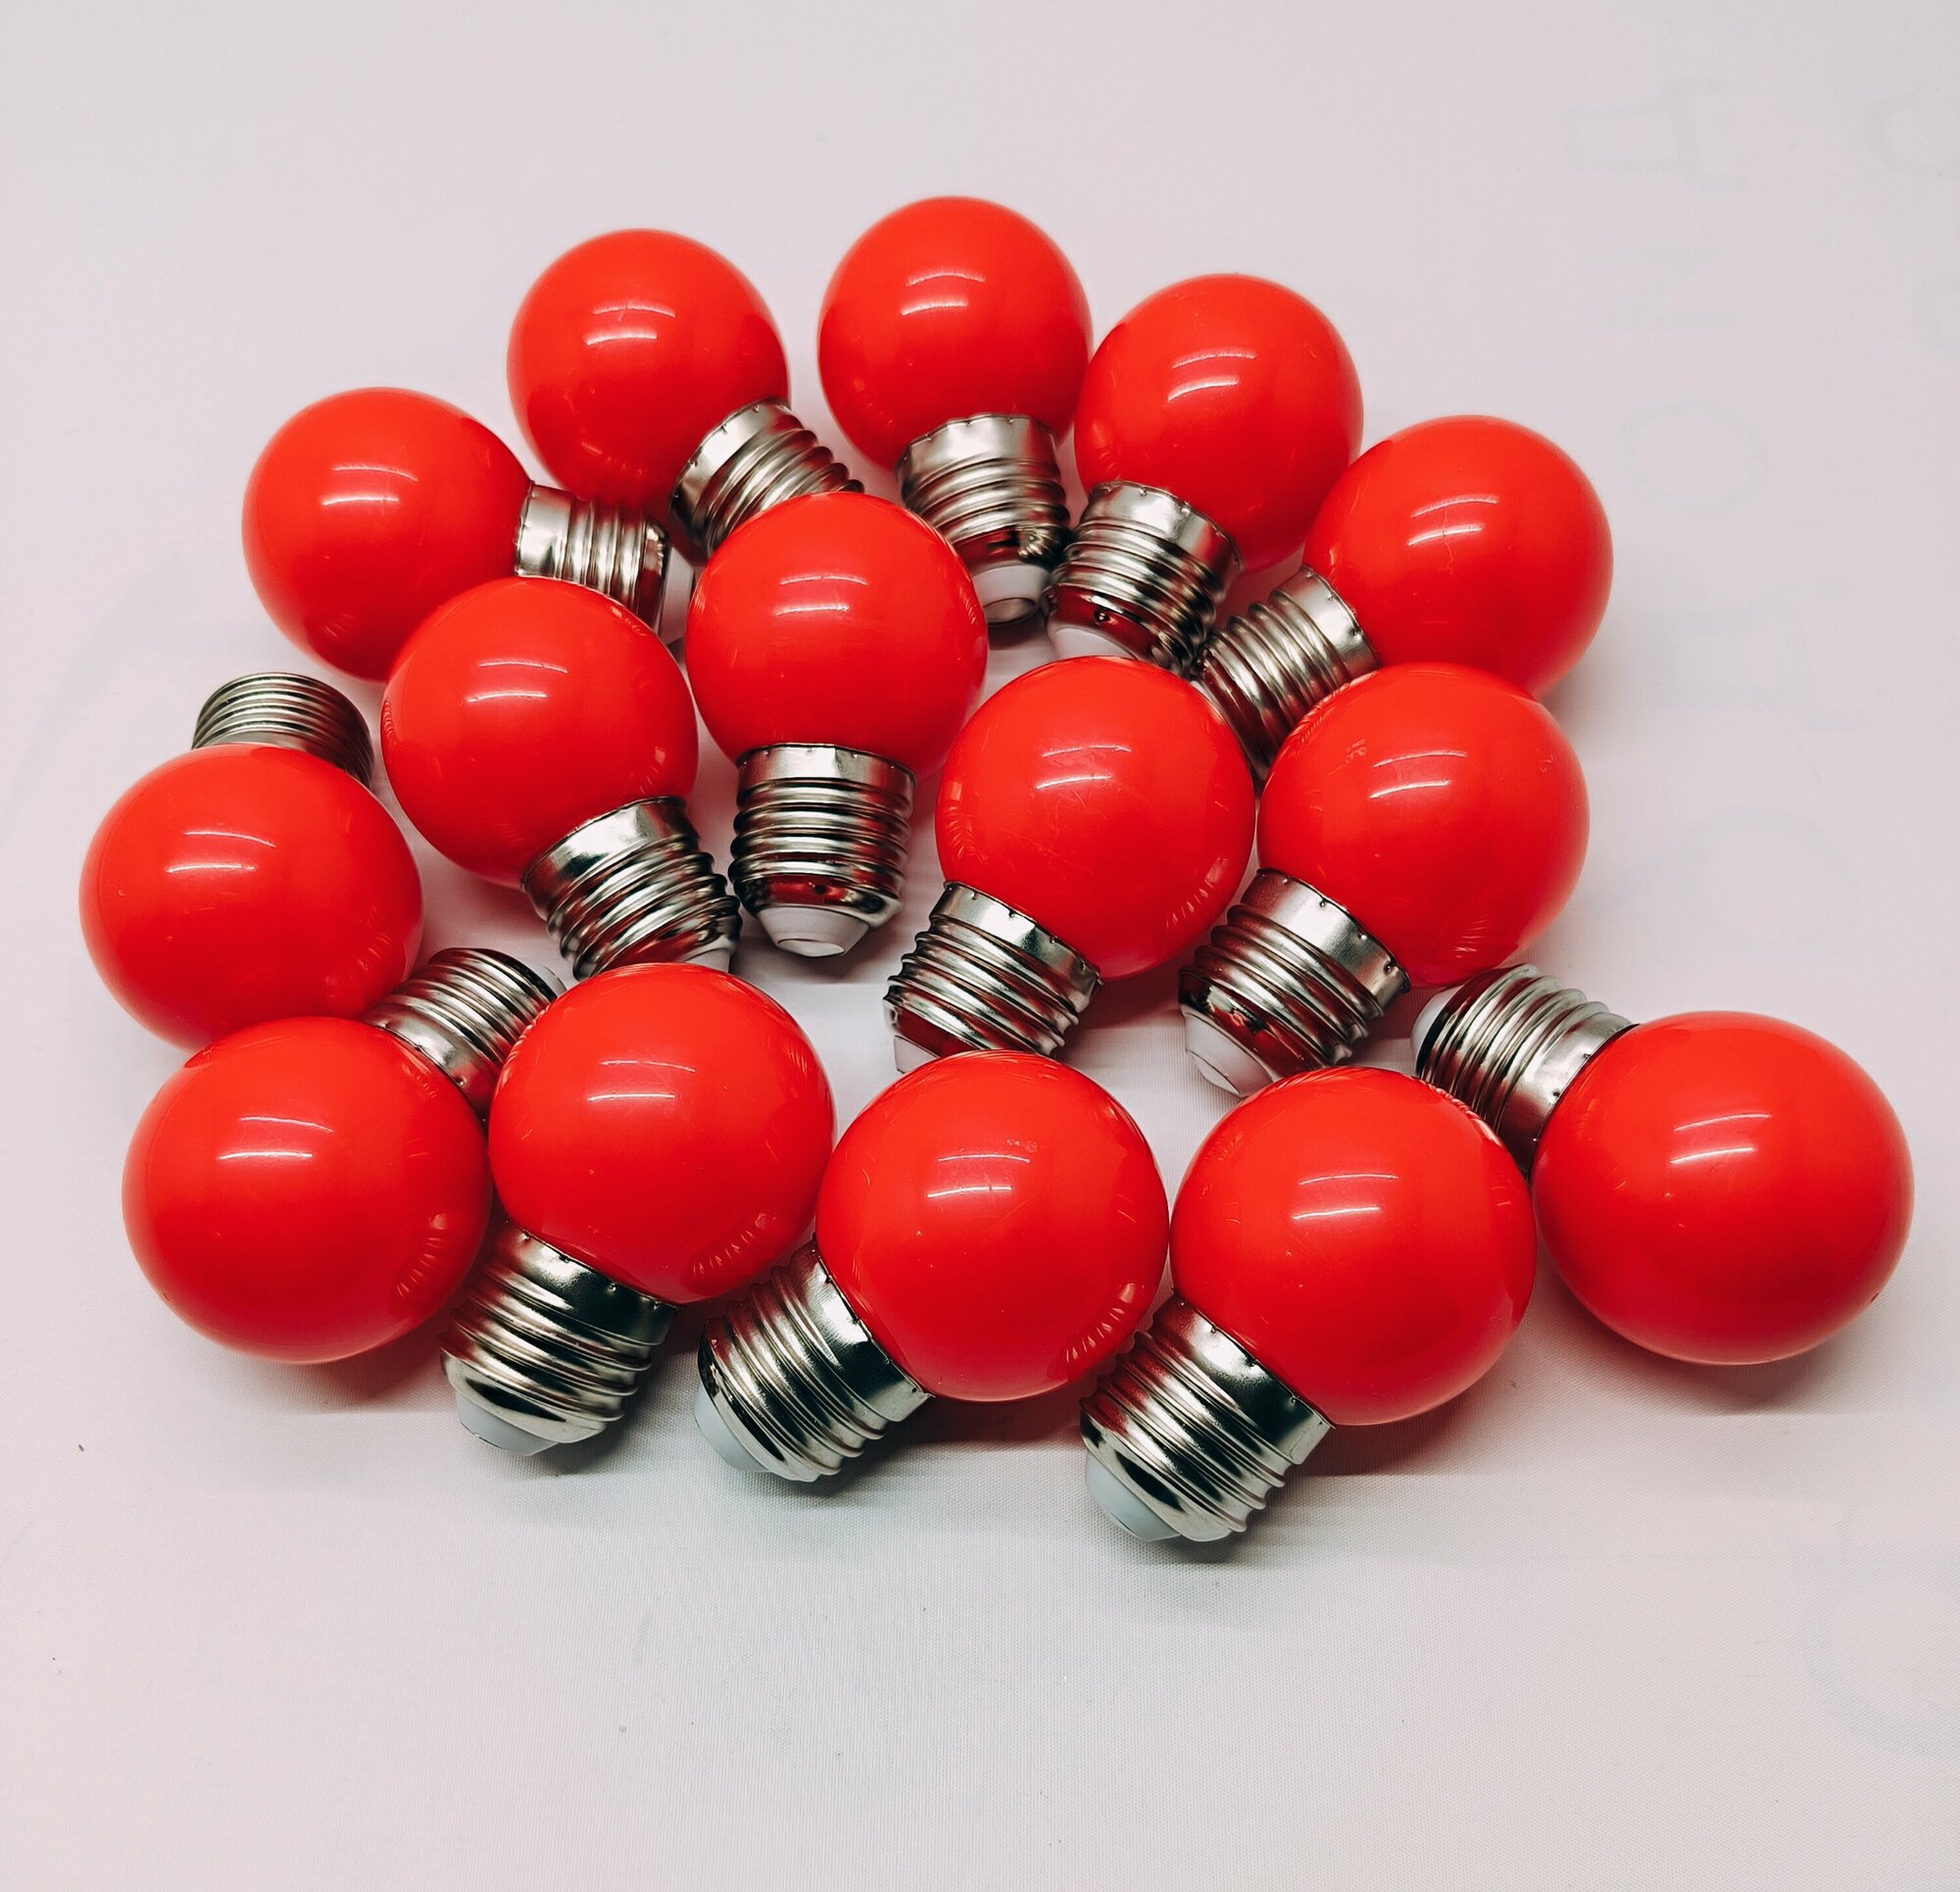 Лампы шарик для гирлянды белт лайт е27 набор 16ть штук RED